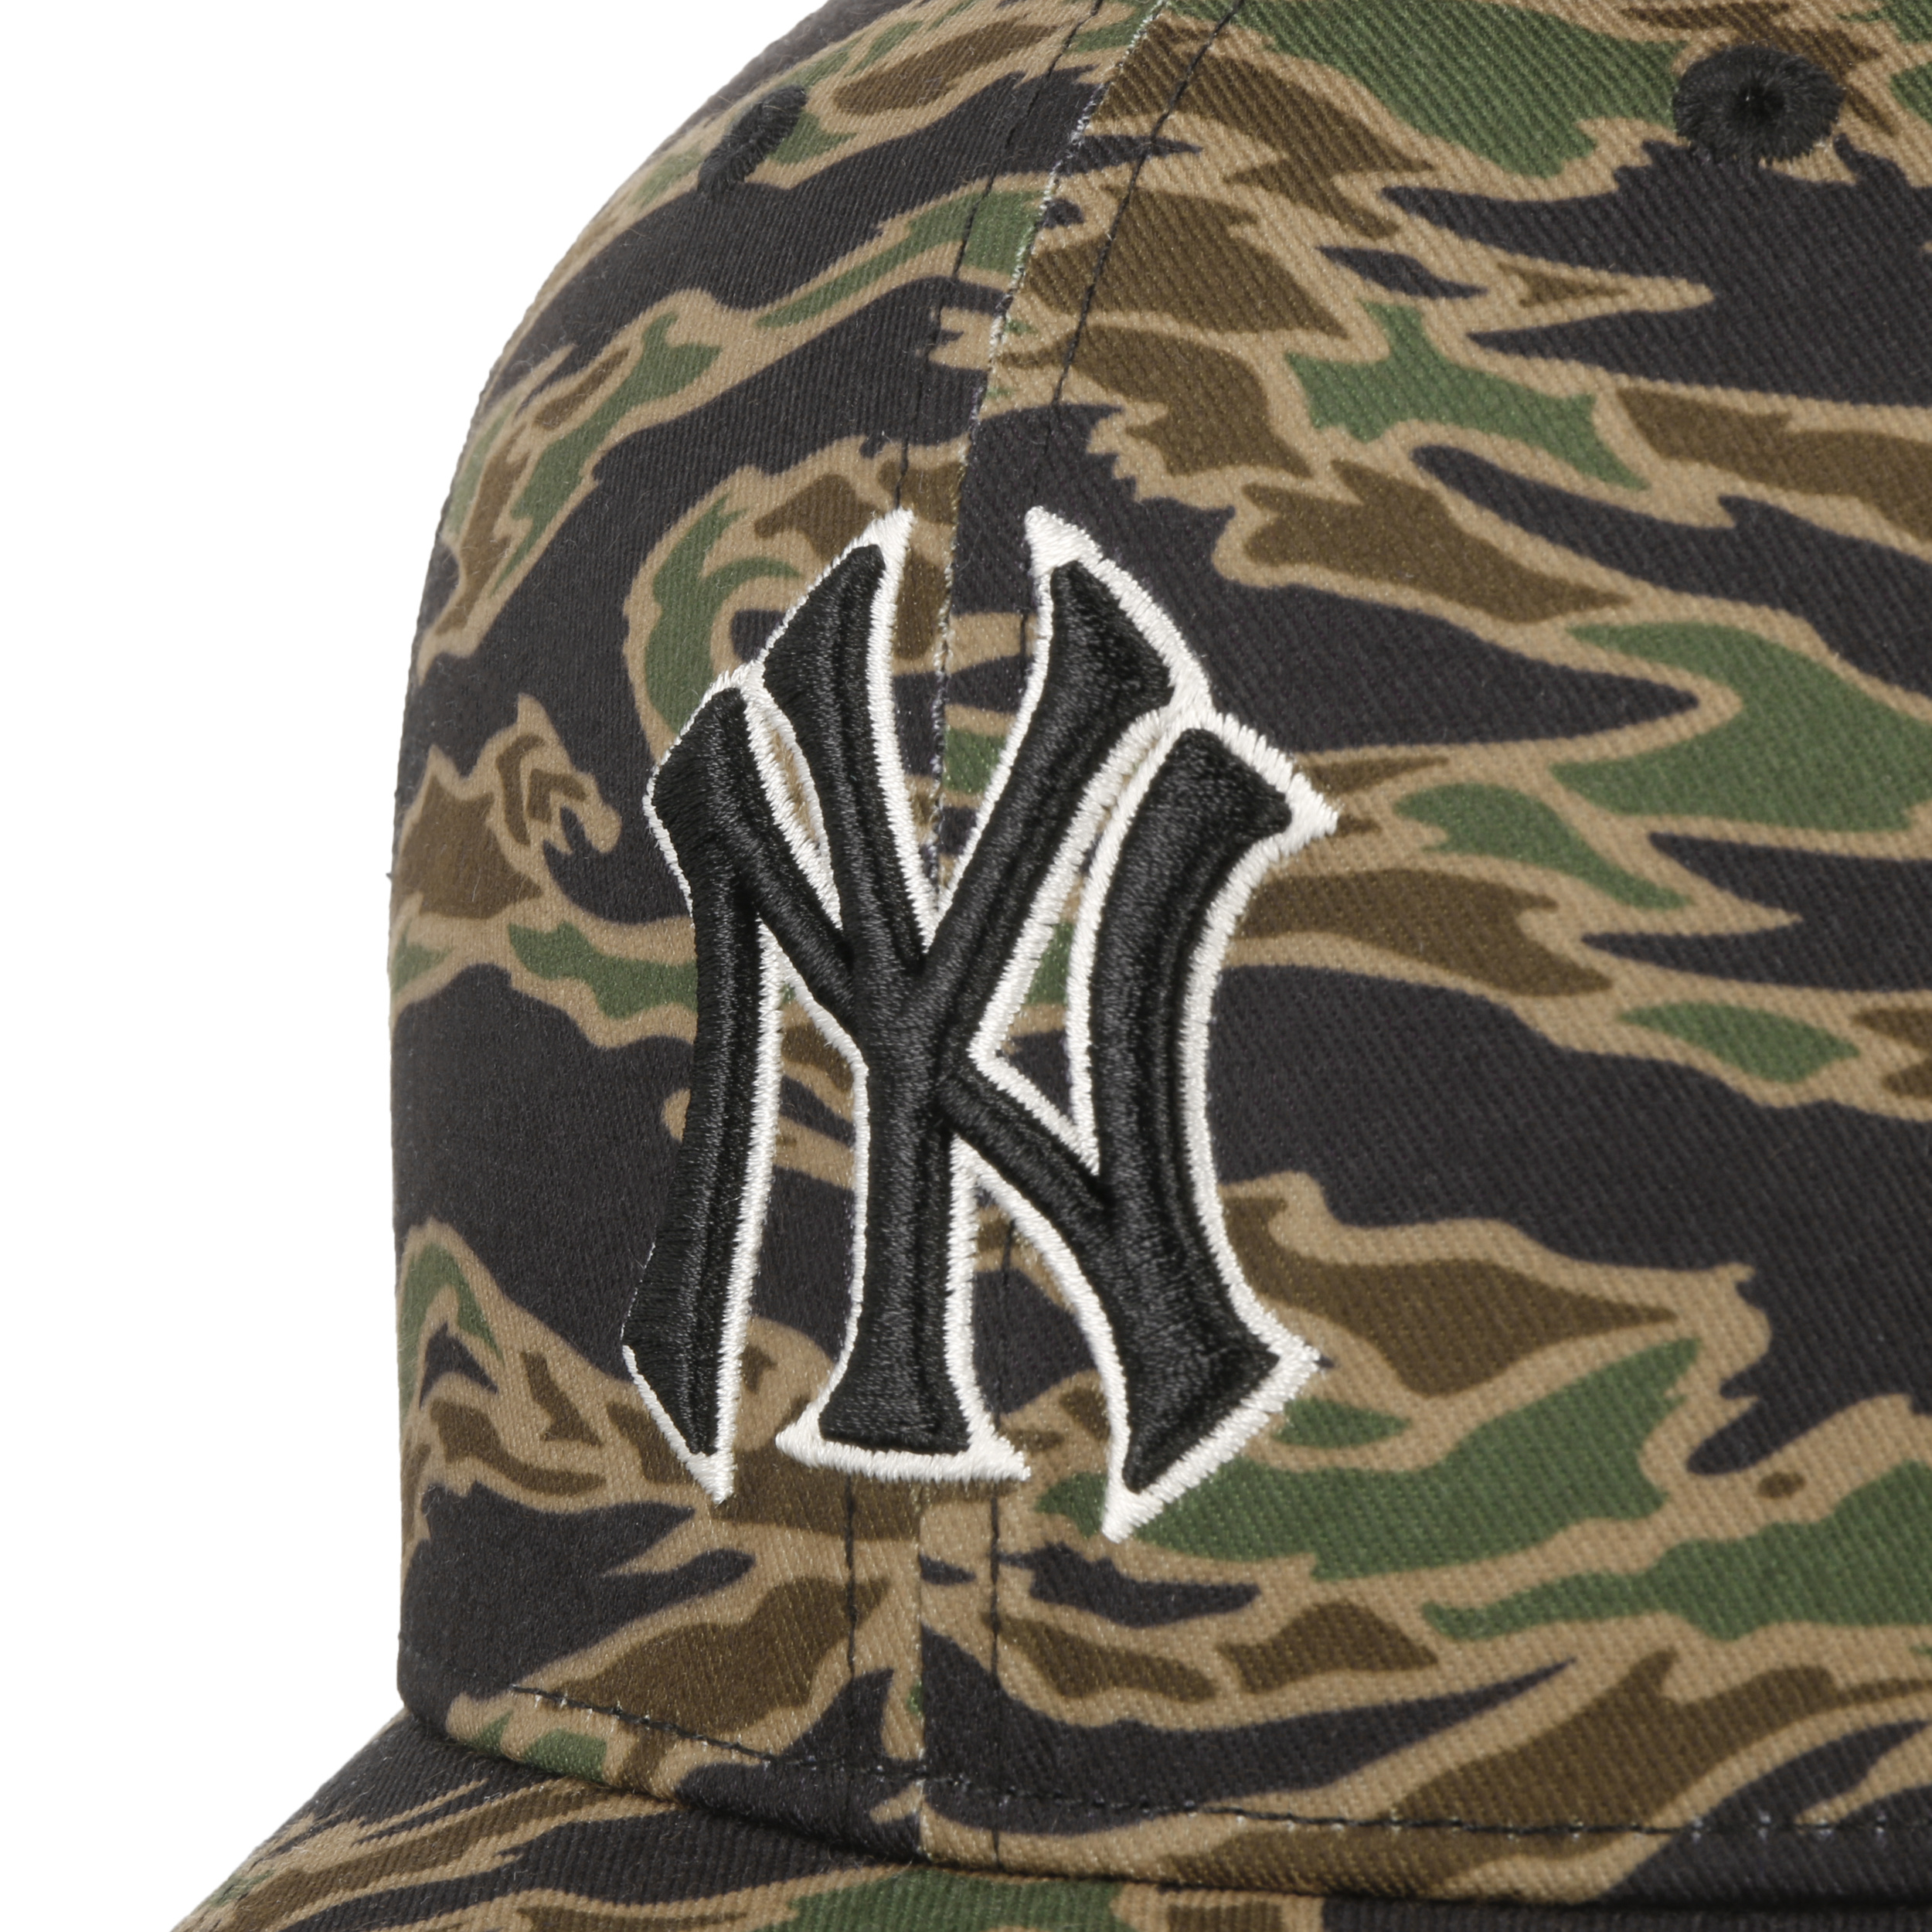 Drop Zone MVP Yankees Mesh Cap by 47 Brand - 29,95 €